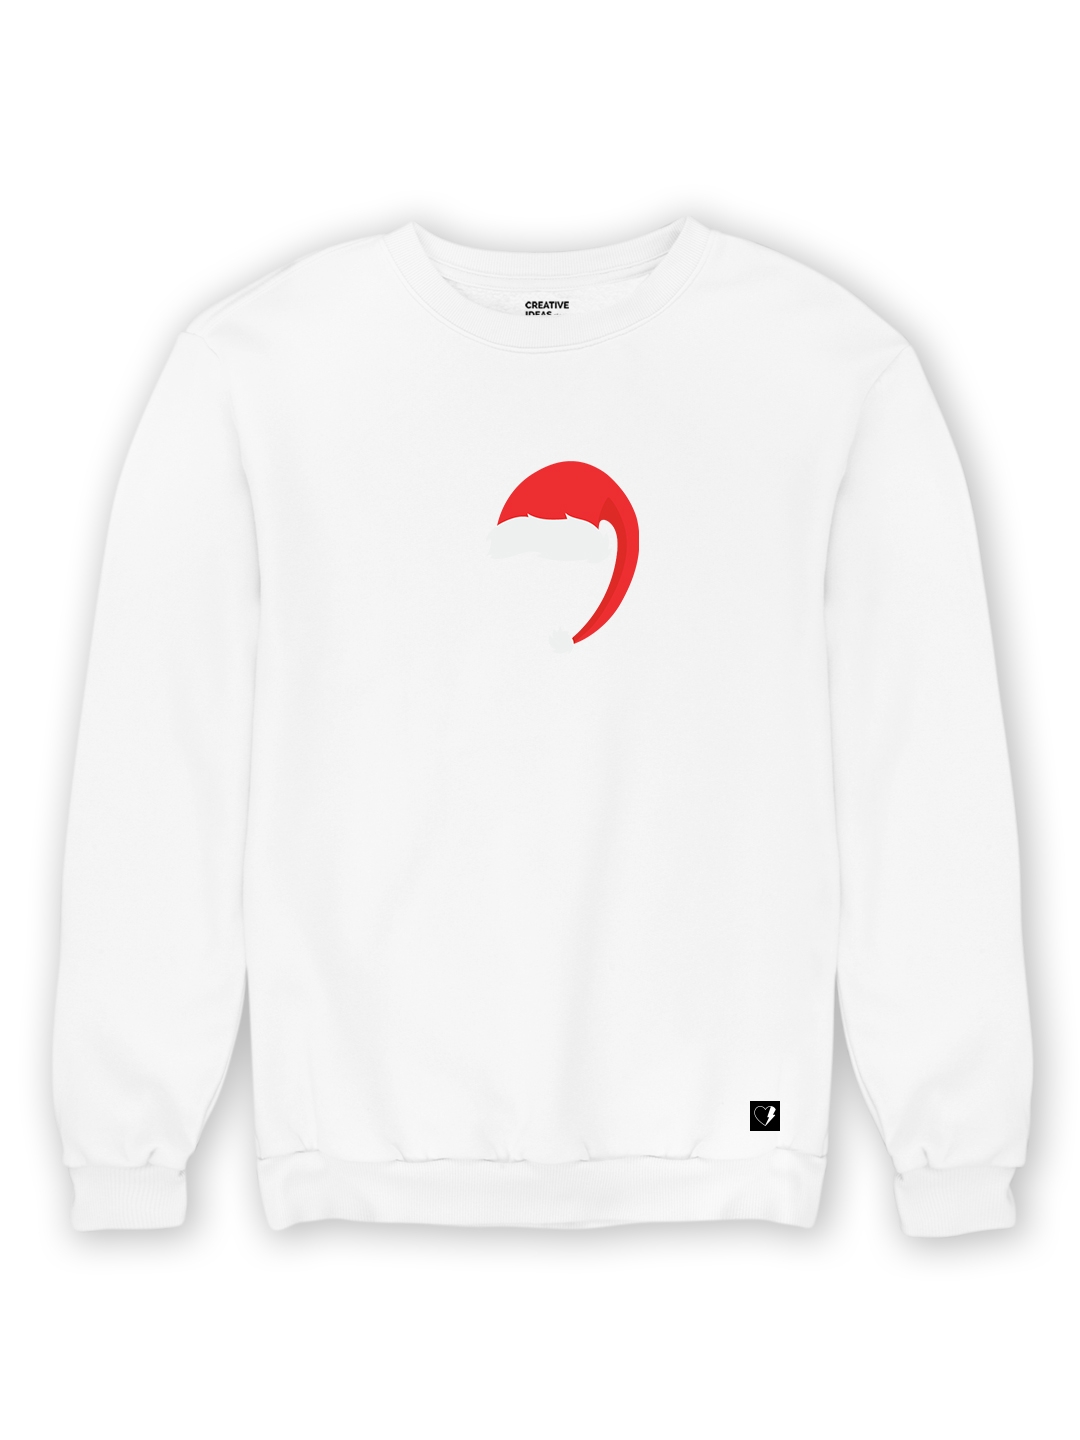 creativeideas.store | Christmas Cap White Unisex Cotton Sweatshirt 0